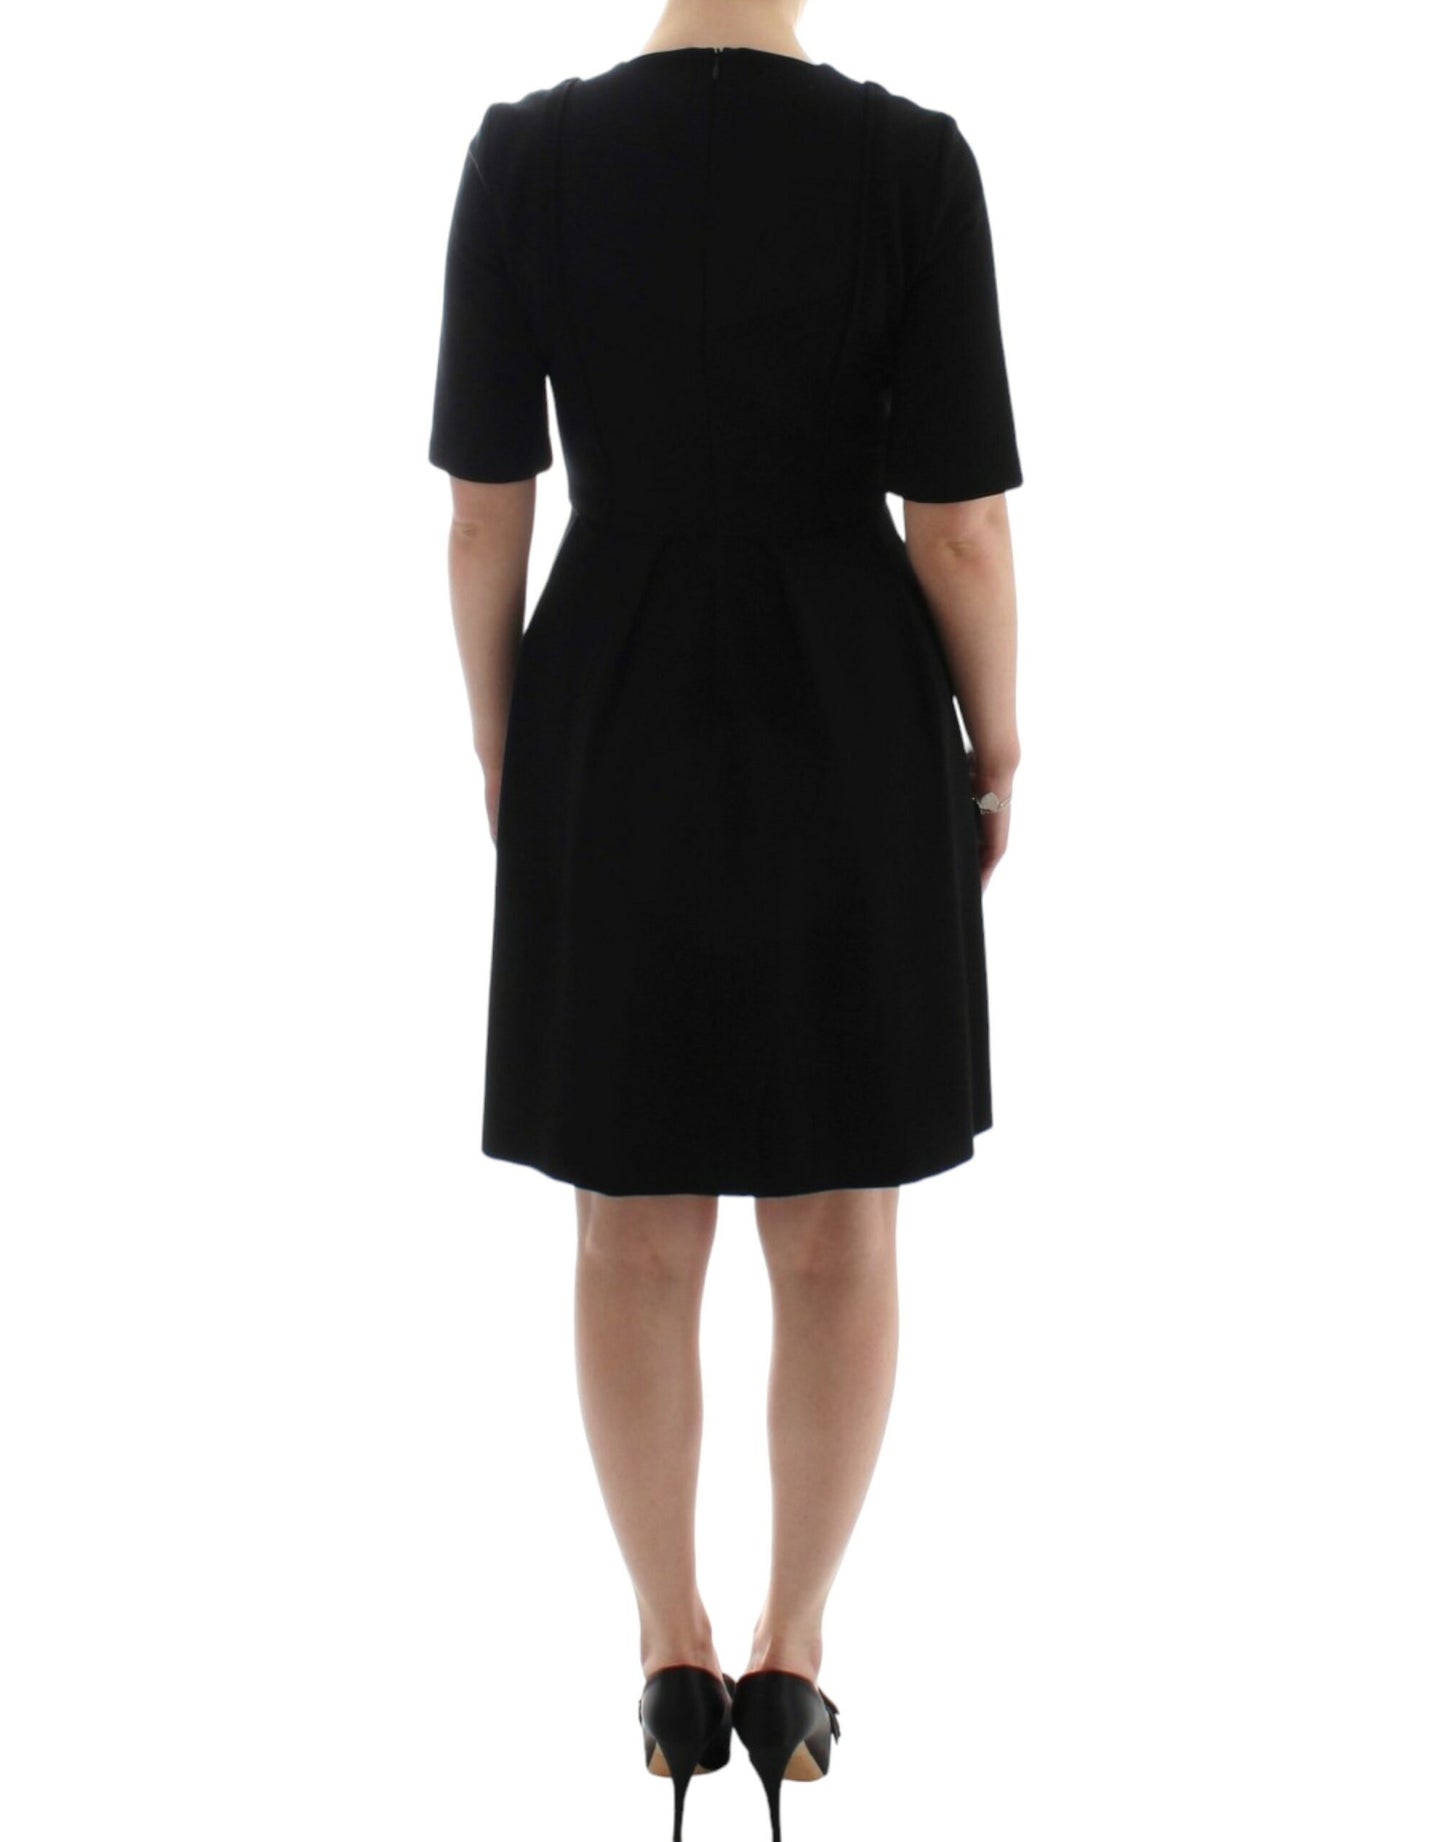 Elegant Black Short Sleeve Venus Dress